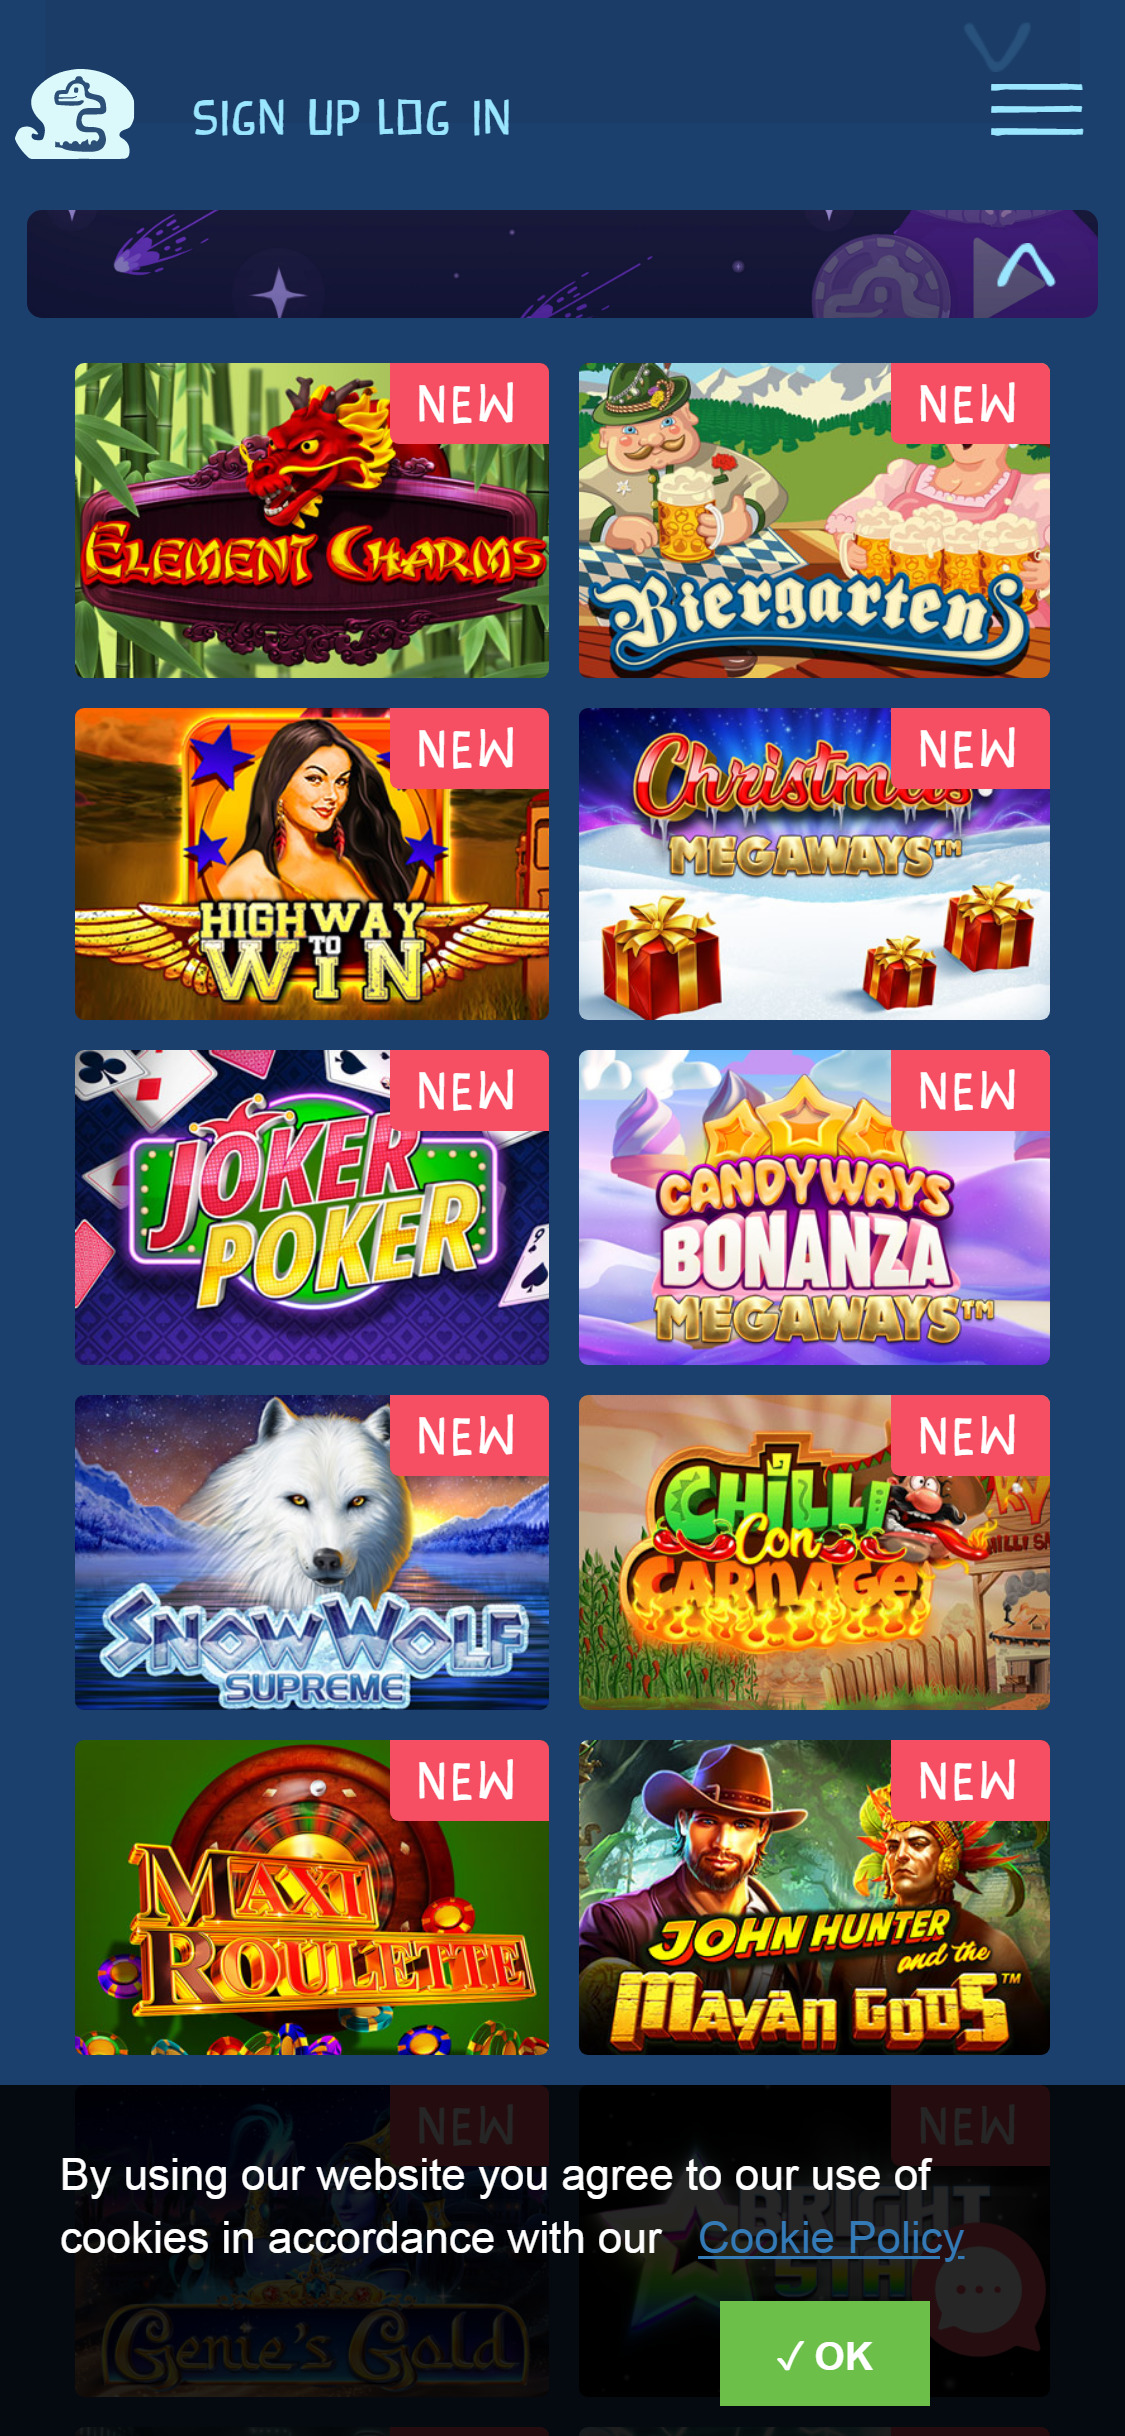 Fantasino Casino Mobile Games Review